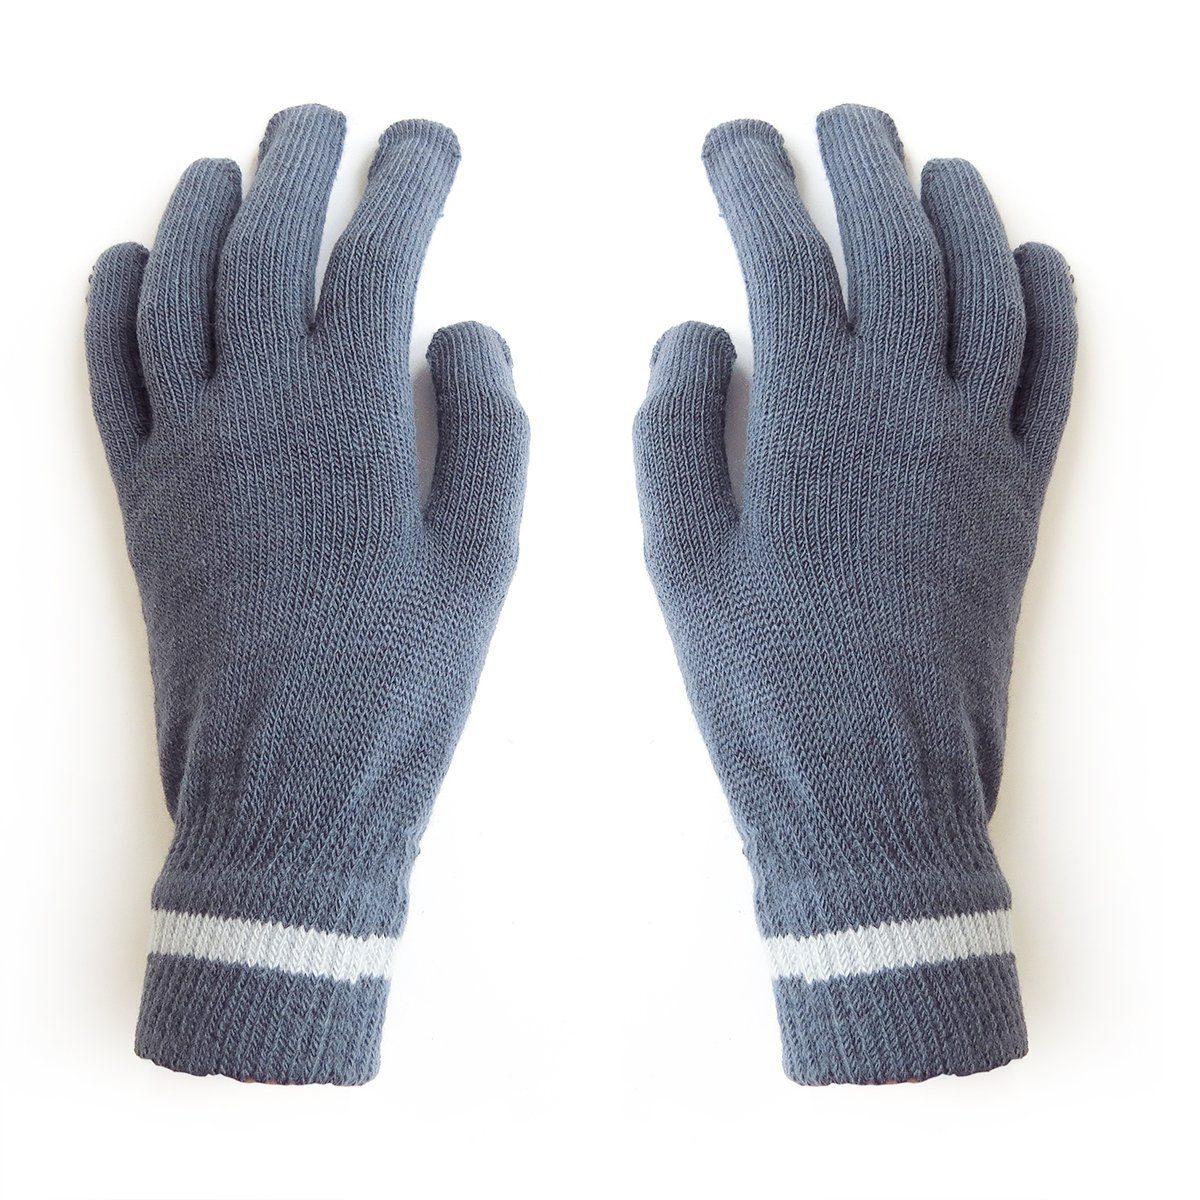 Sonia Originelli Strickhandschuhe Strickhandschuhe Finger Streifen Uni Winter Unisex Onesize blaugrau